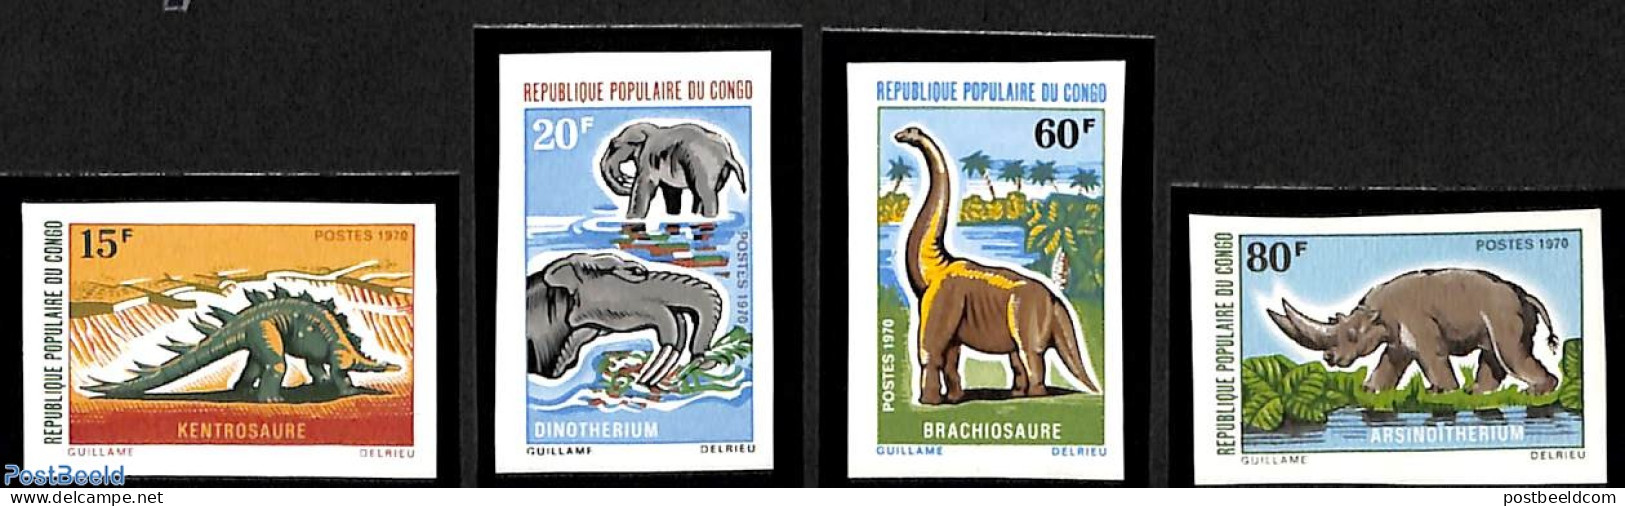 Congo Republic 1970 Prehistoric Animals 4v, Imperforated, Mint NH, Nature - Prehistoric Animals - Prehistorics